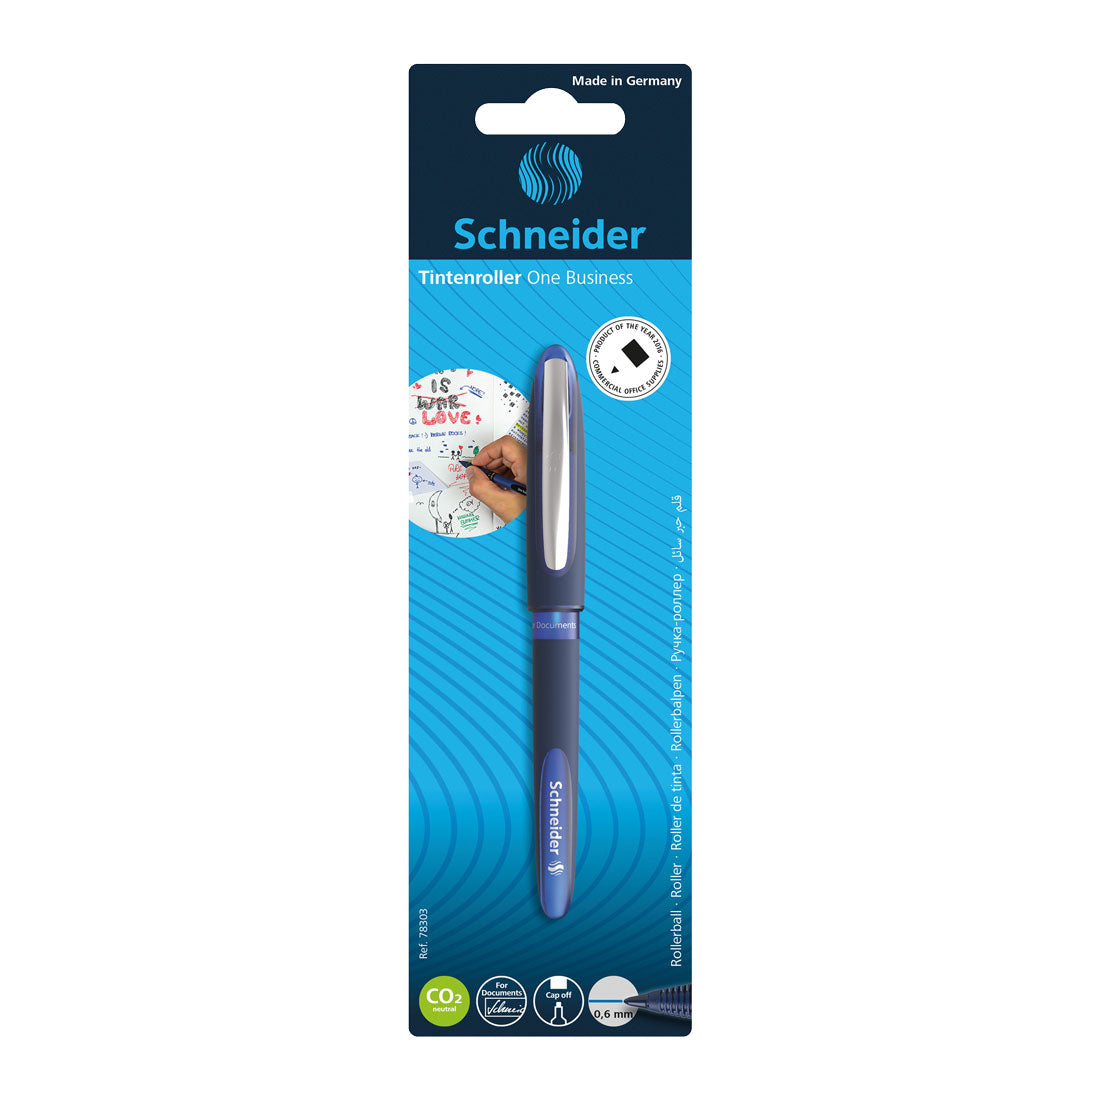 Schneider One Business Rollerball Pen, 0.6 mm Ultra-Smooth Tip, Blue Barrel, Blue Ink, Blister Pack of 1 Pen (78303)